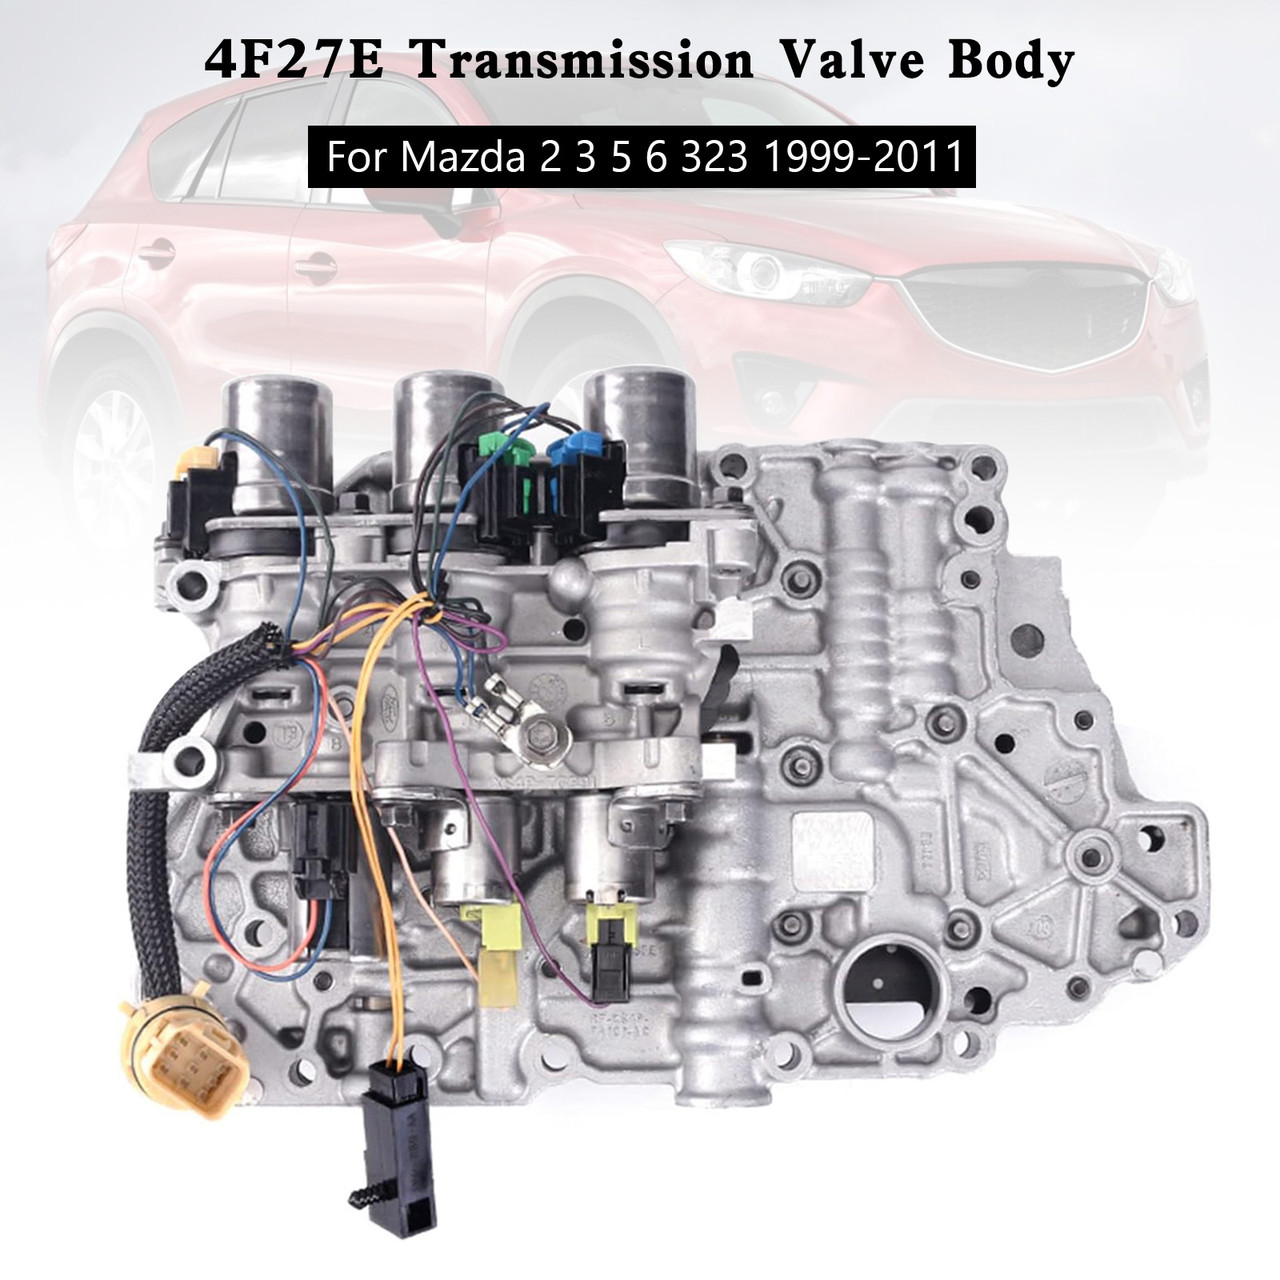 4F27E Transmission Valve Body For Mazda 2 3 5 6 323 1999-2011